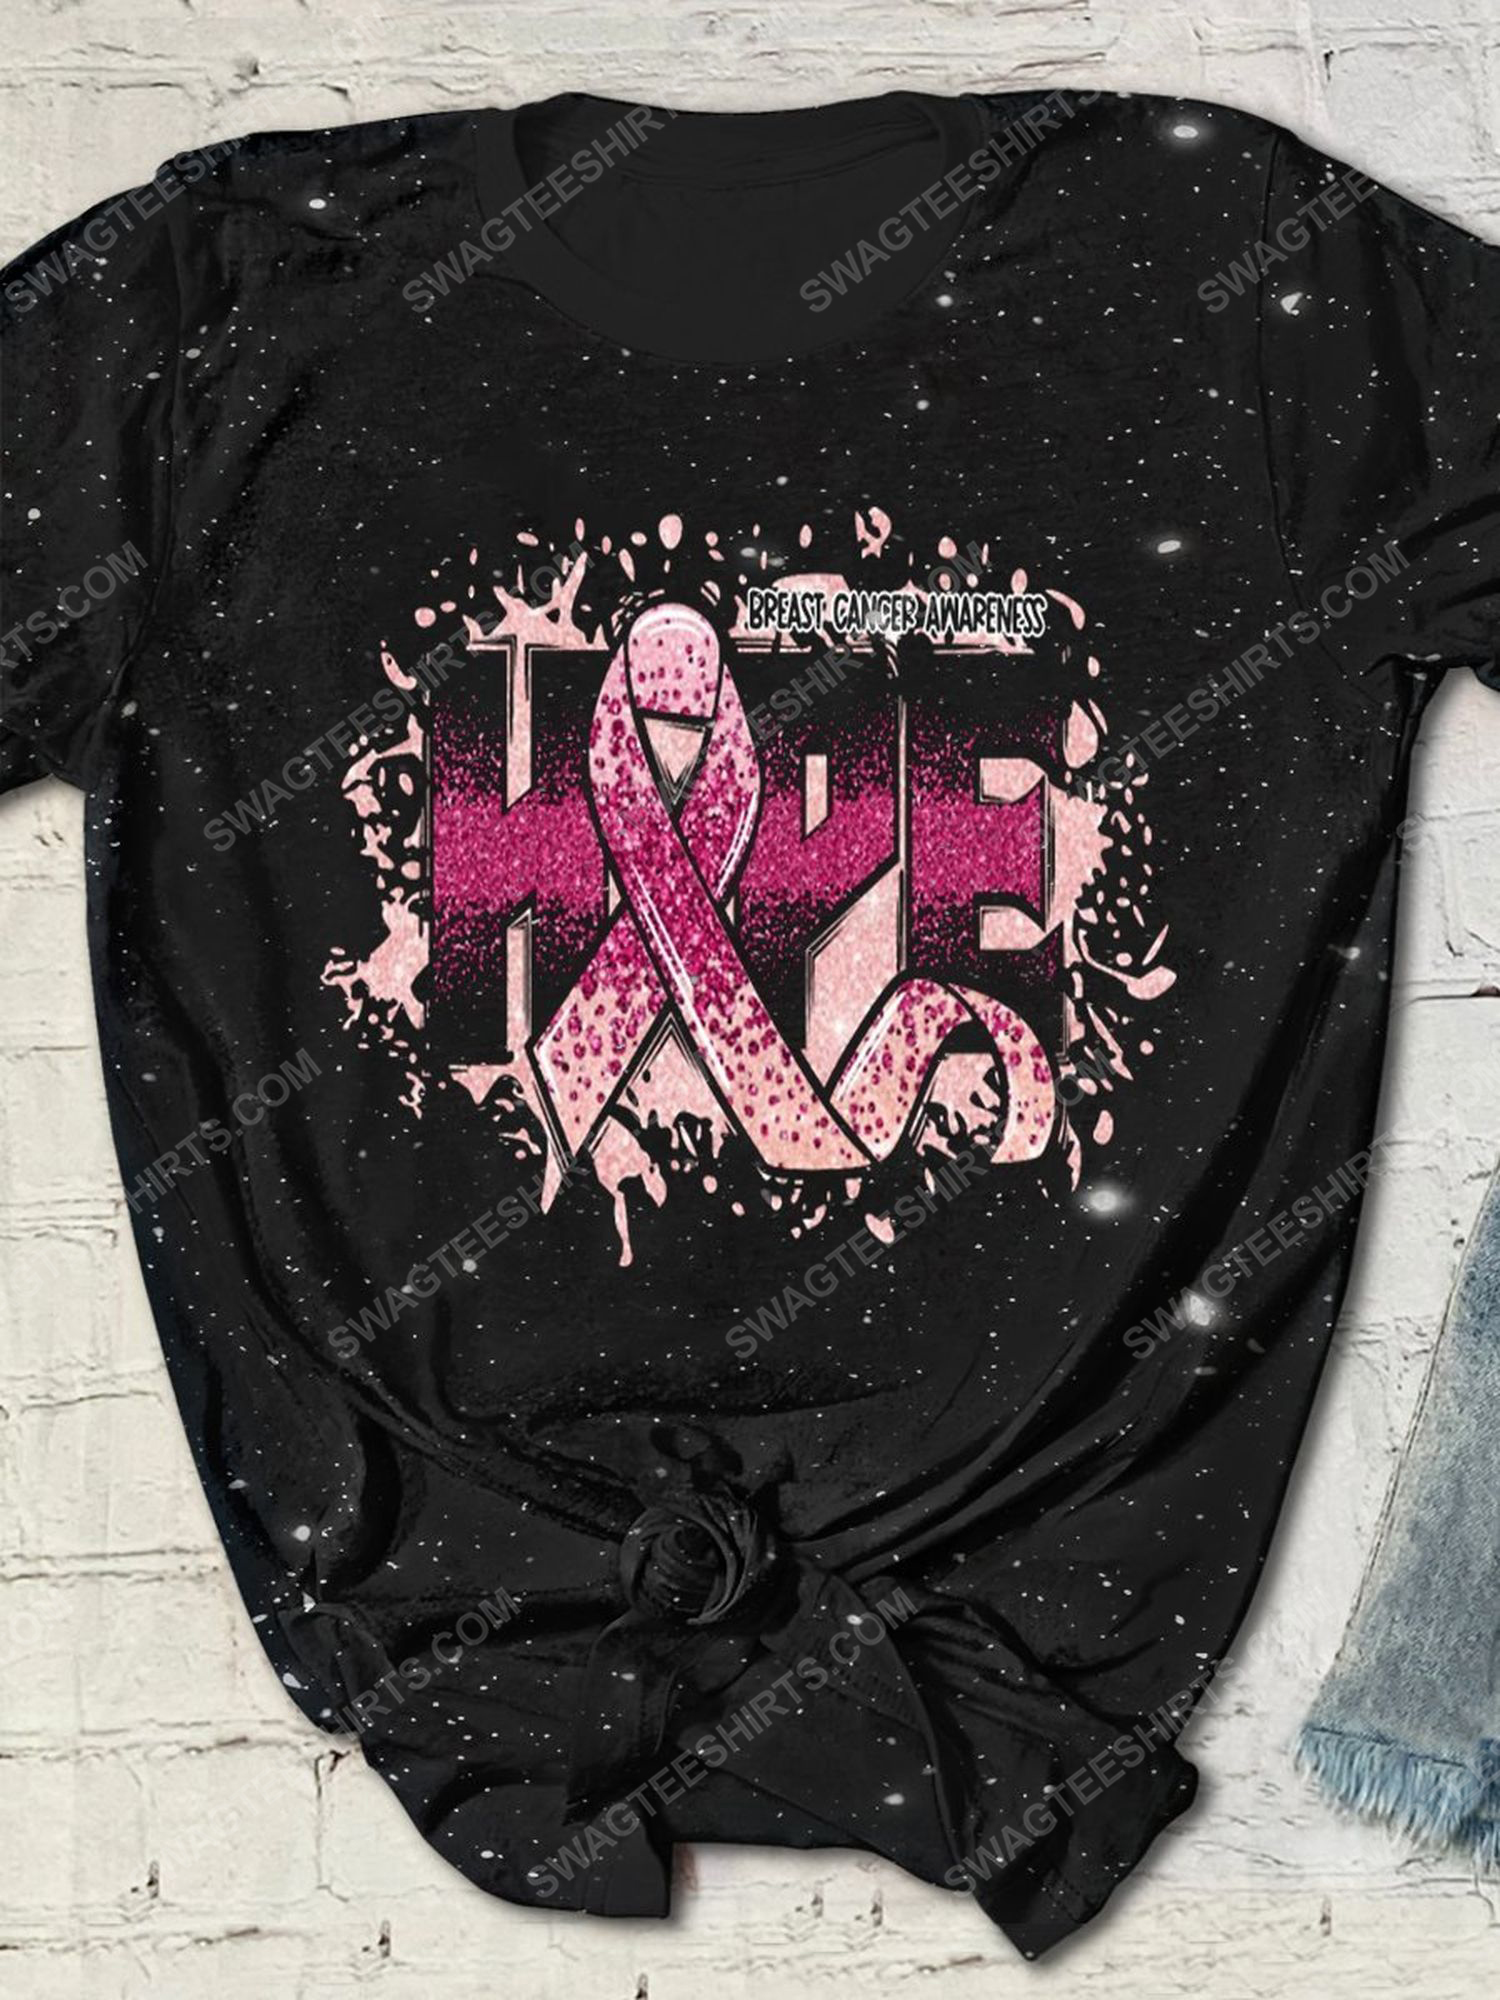 Breast cancer awareness hope bleached shirt 1